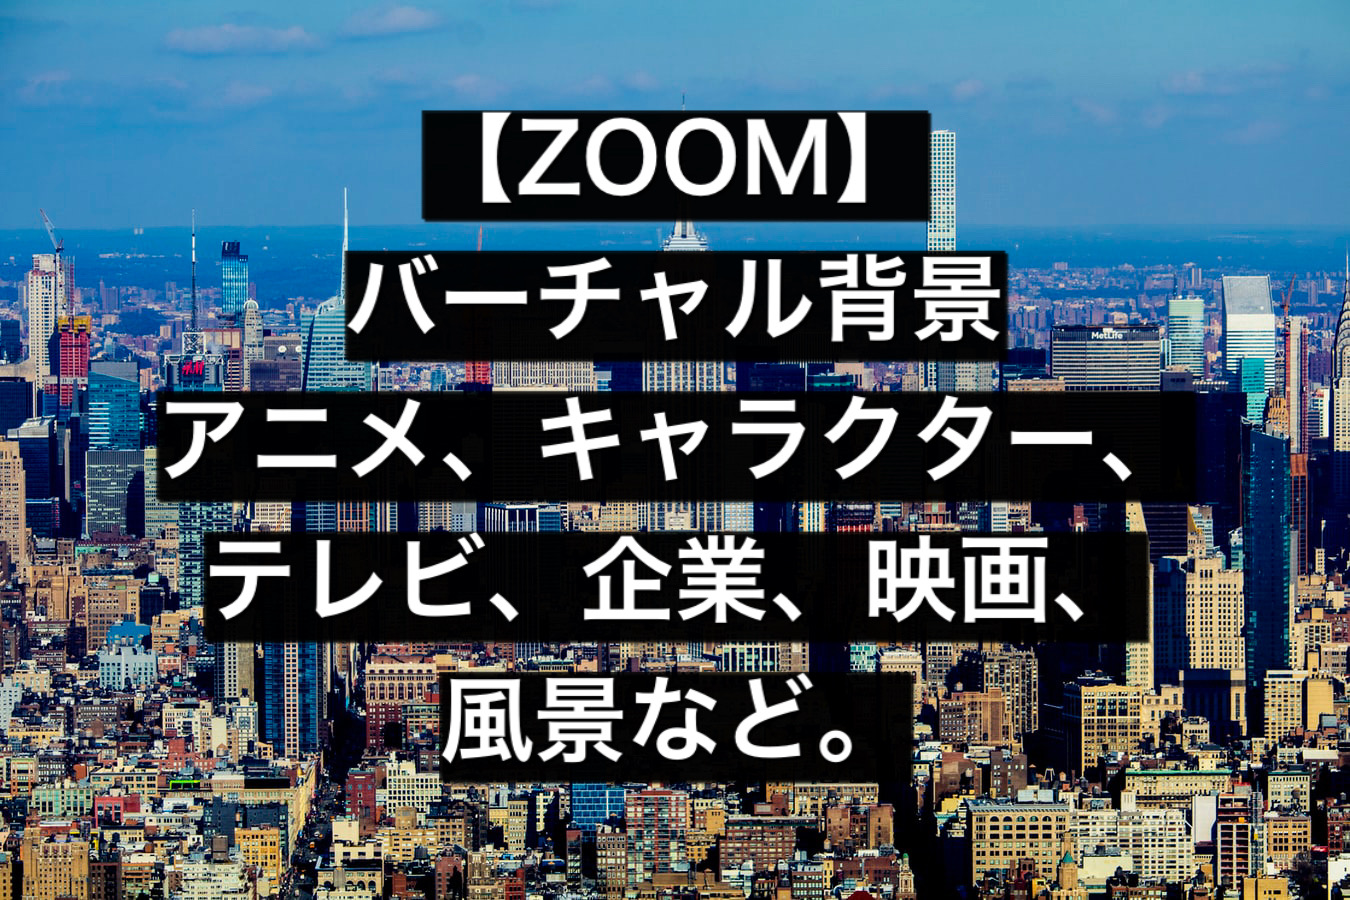 Zoom 壁紙 Zoom会議で スマートな名刺交換 をする鍵は バーチャル